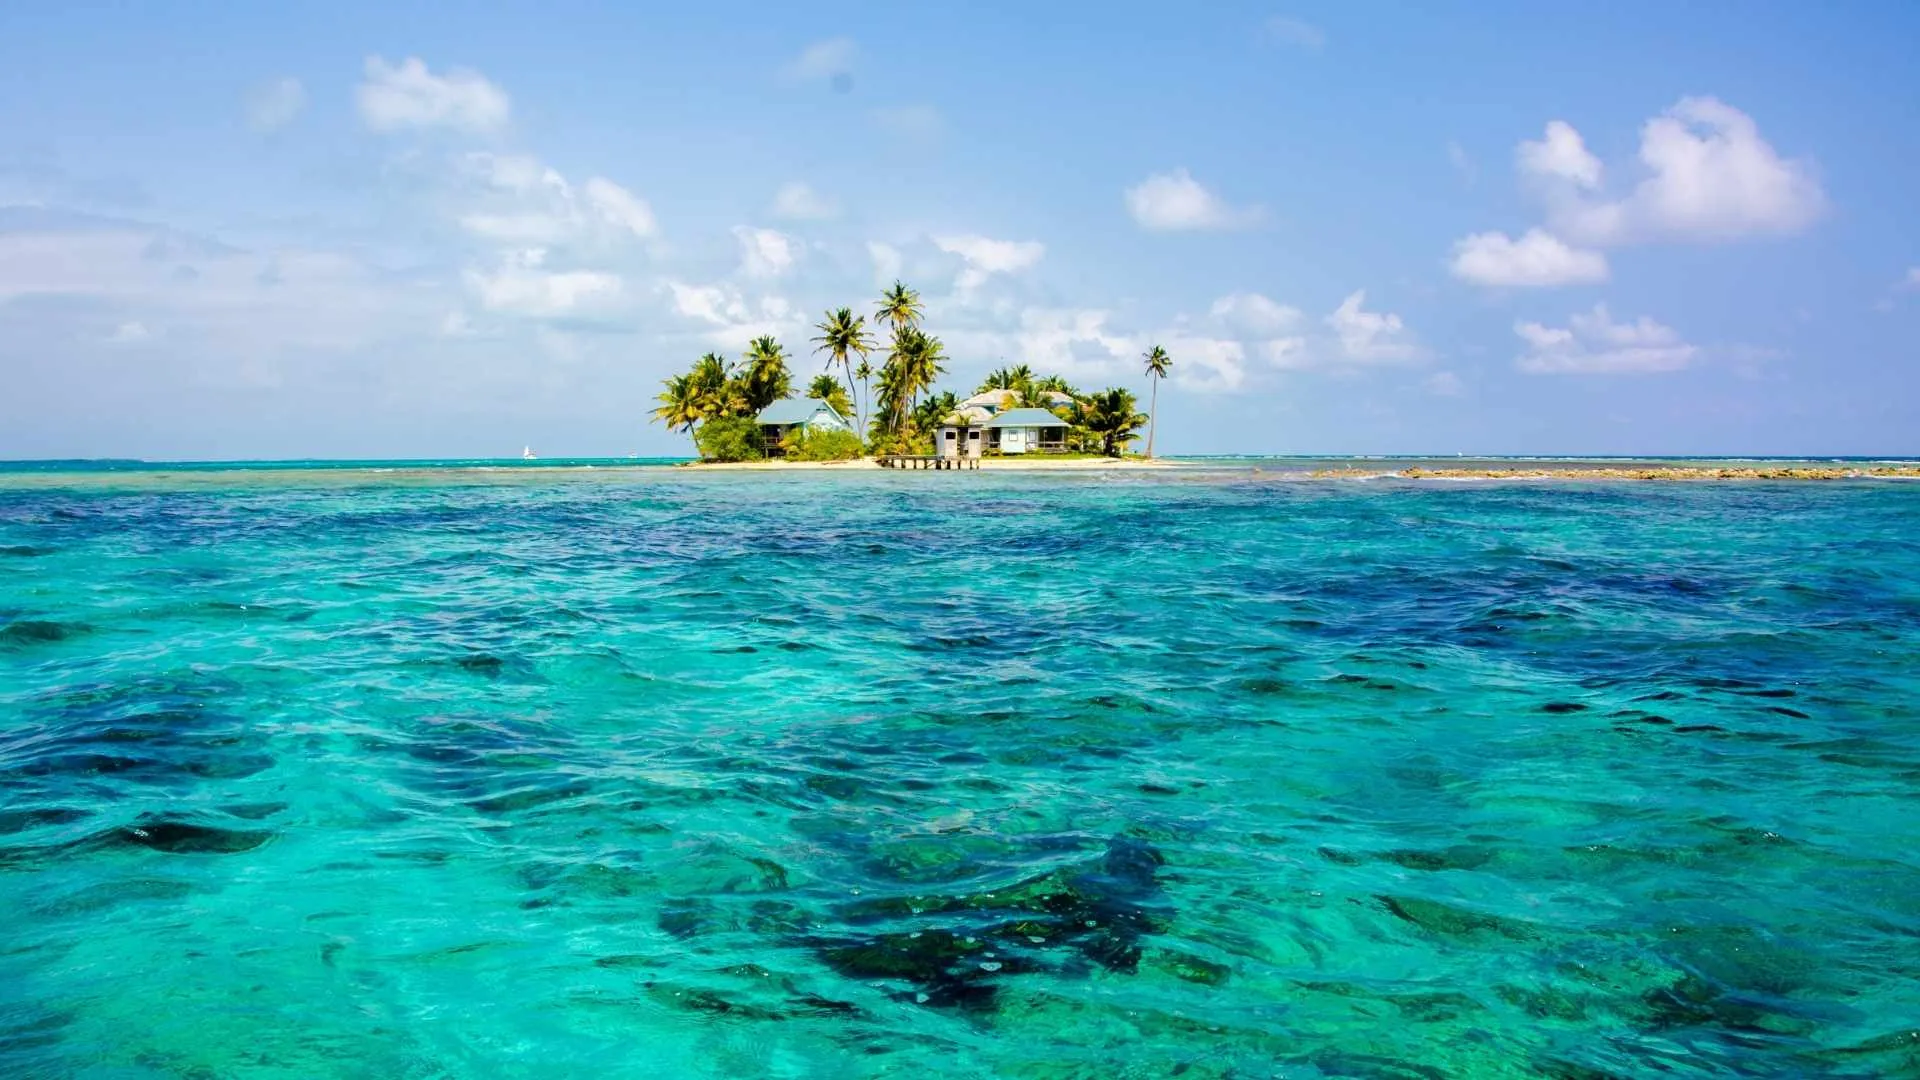 Belize overwater bungalows